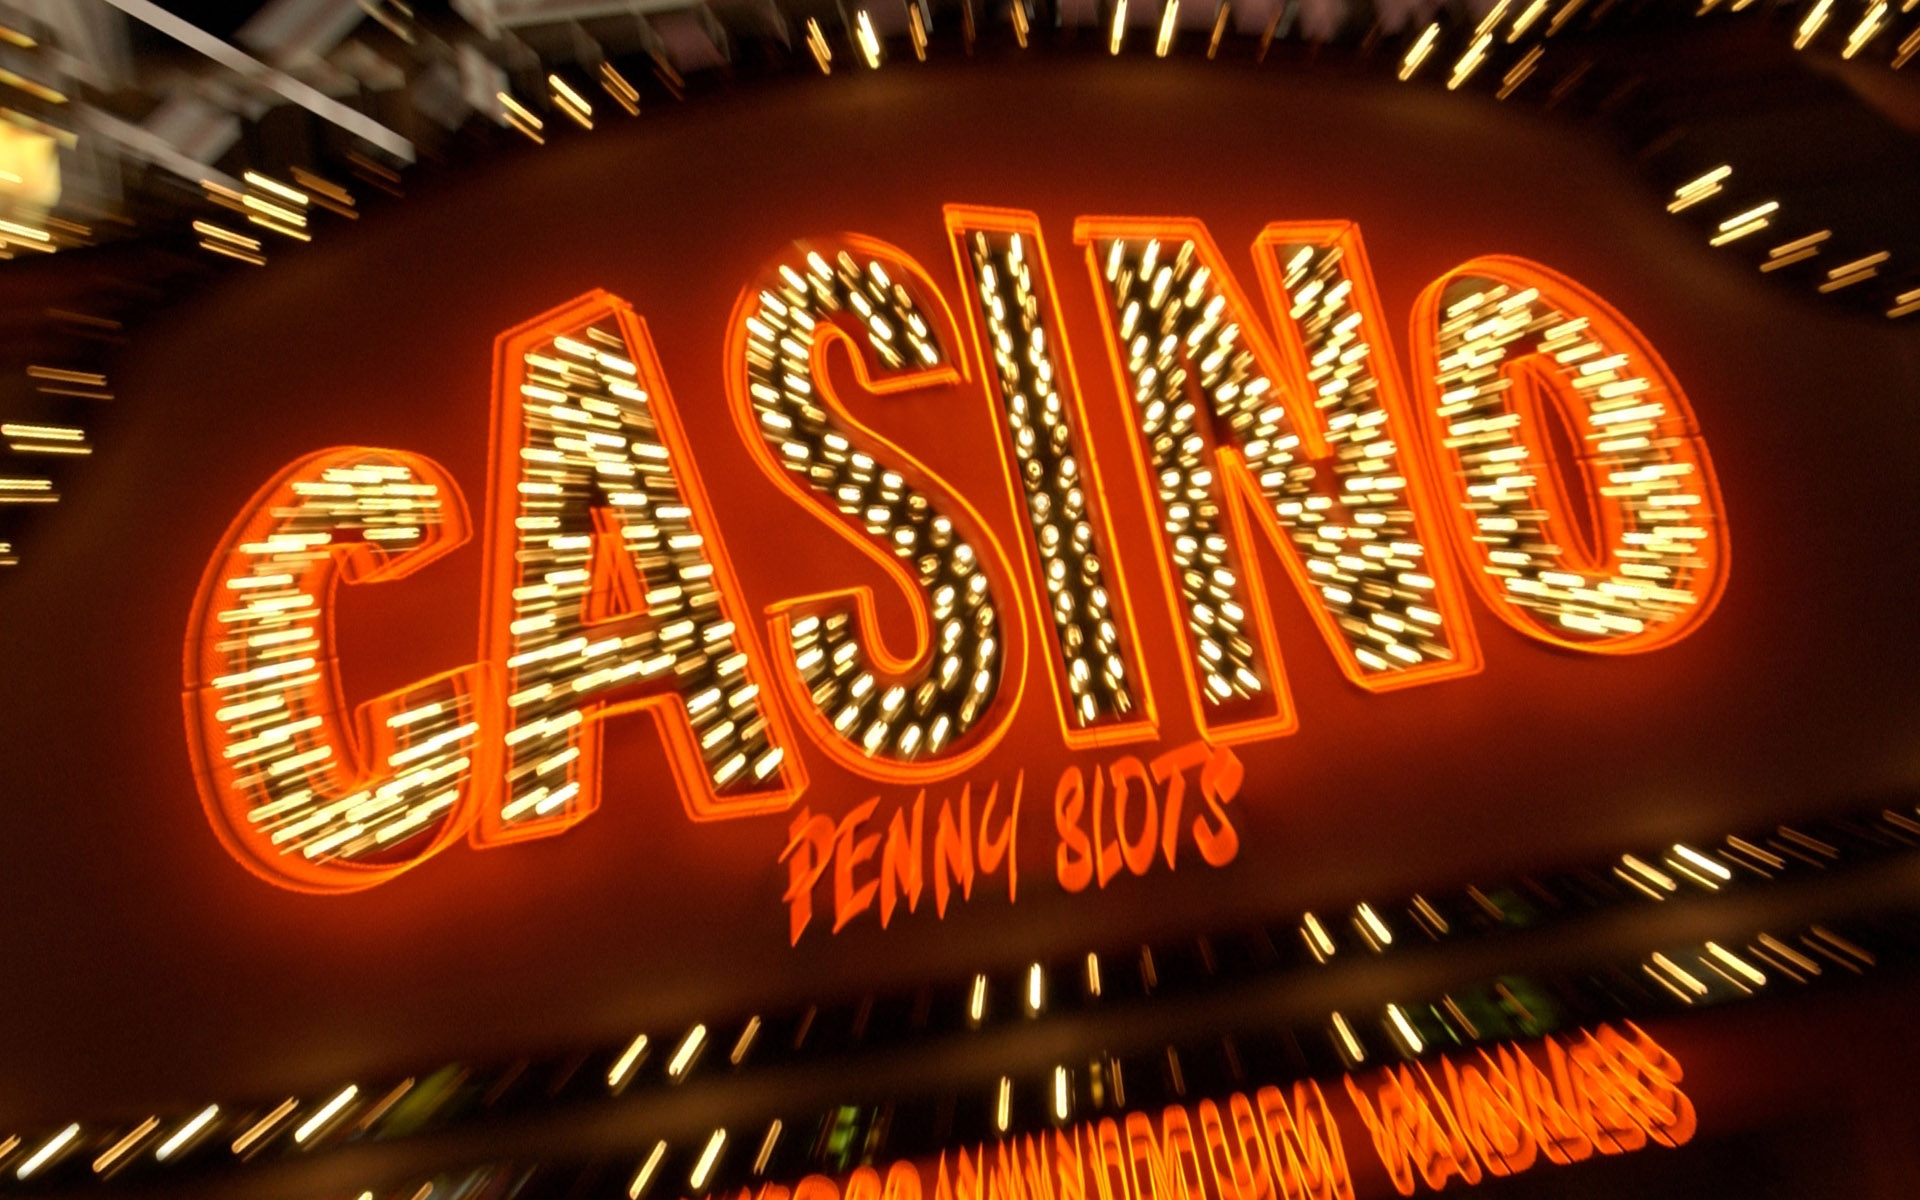 Casinos en ligne